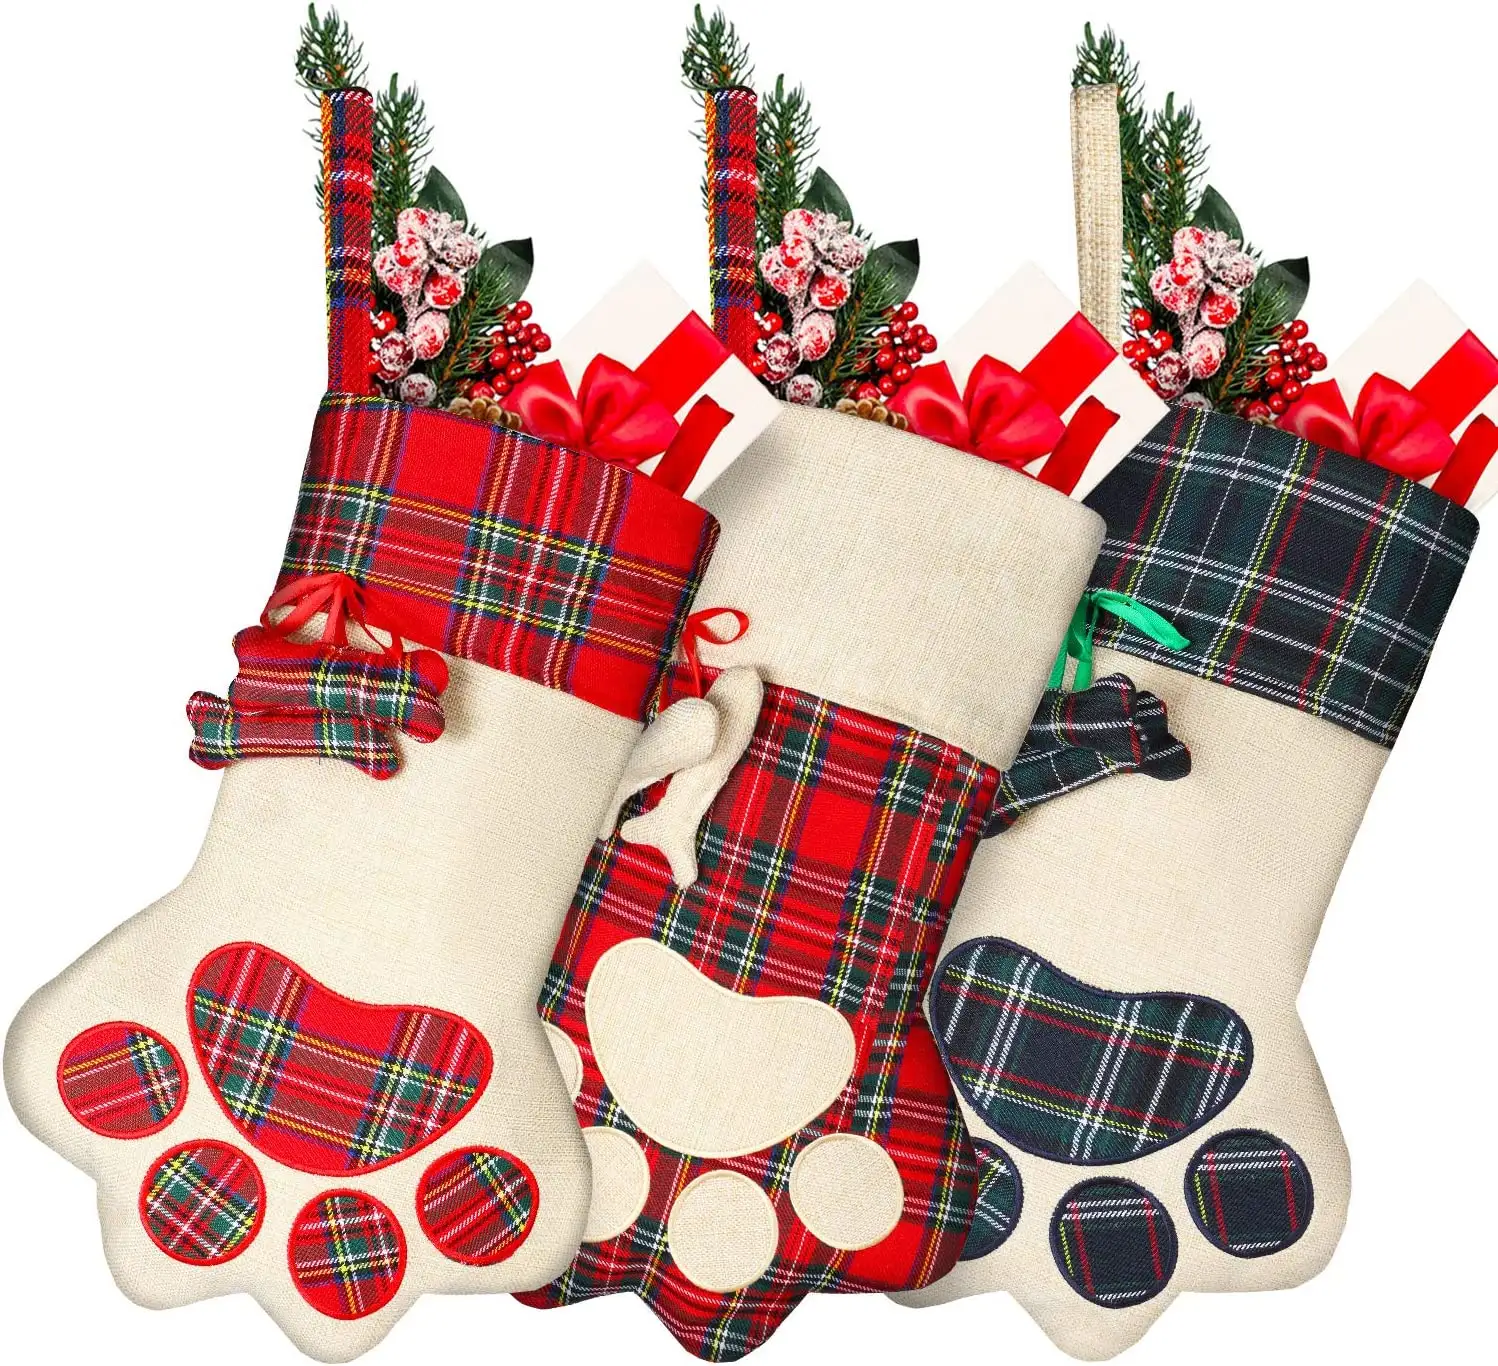 yanyi most popular dog Paw Plaid christmas stocking for Christmas Decorations